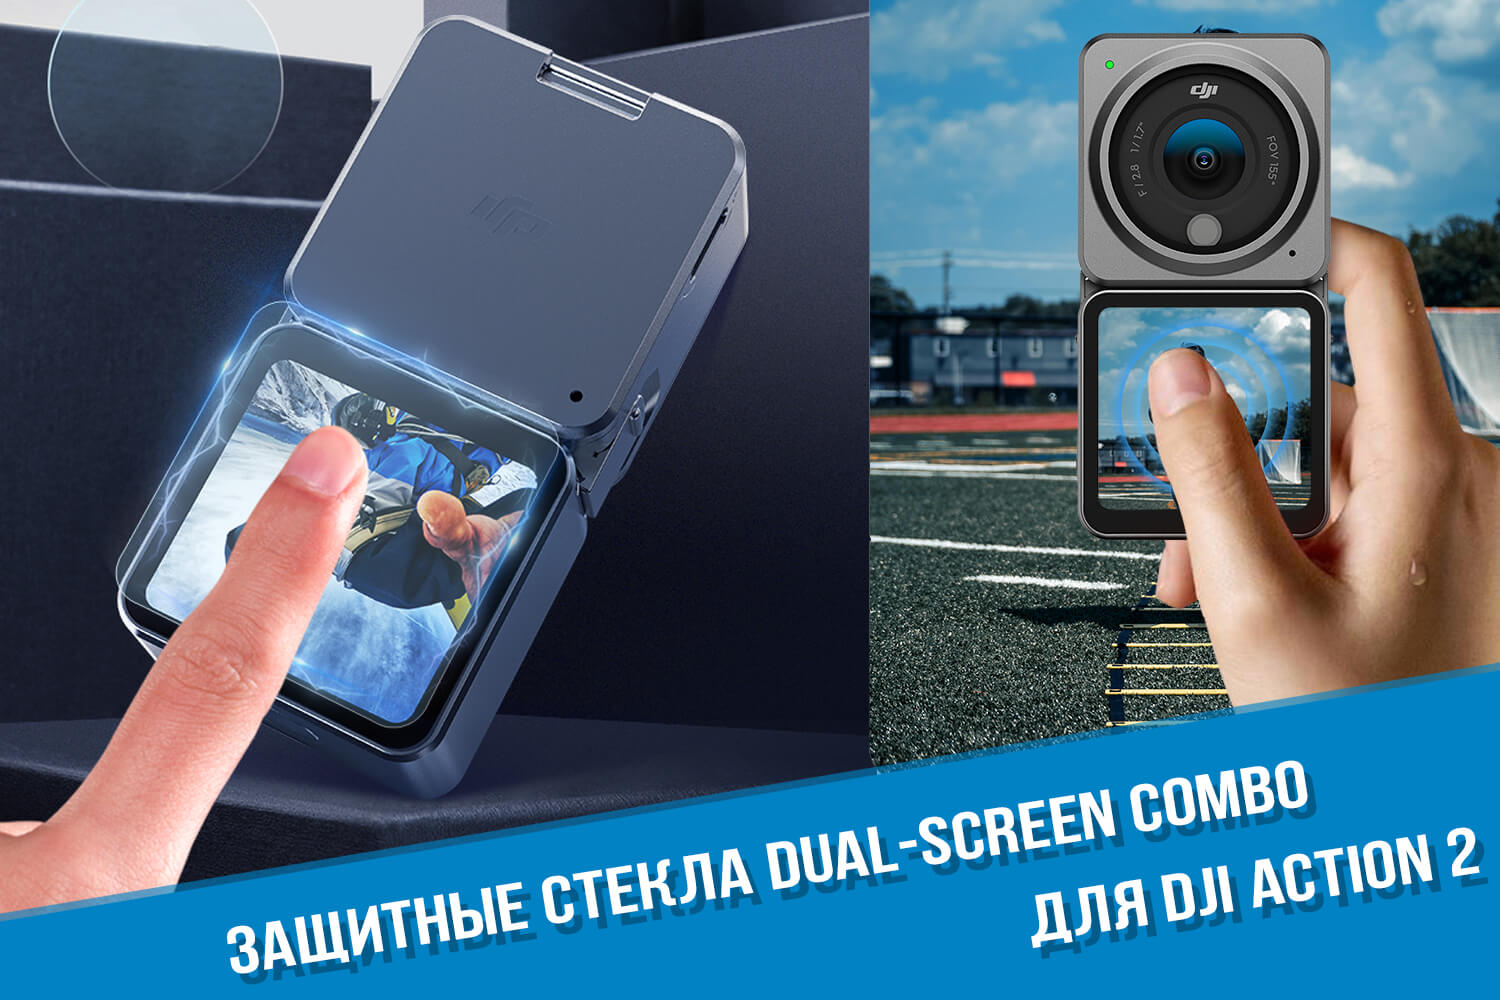 Стекла камеры DJI Action 2 Dual-Screen Combo.